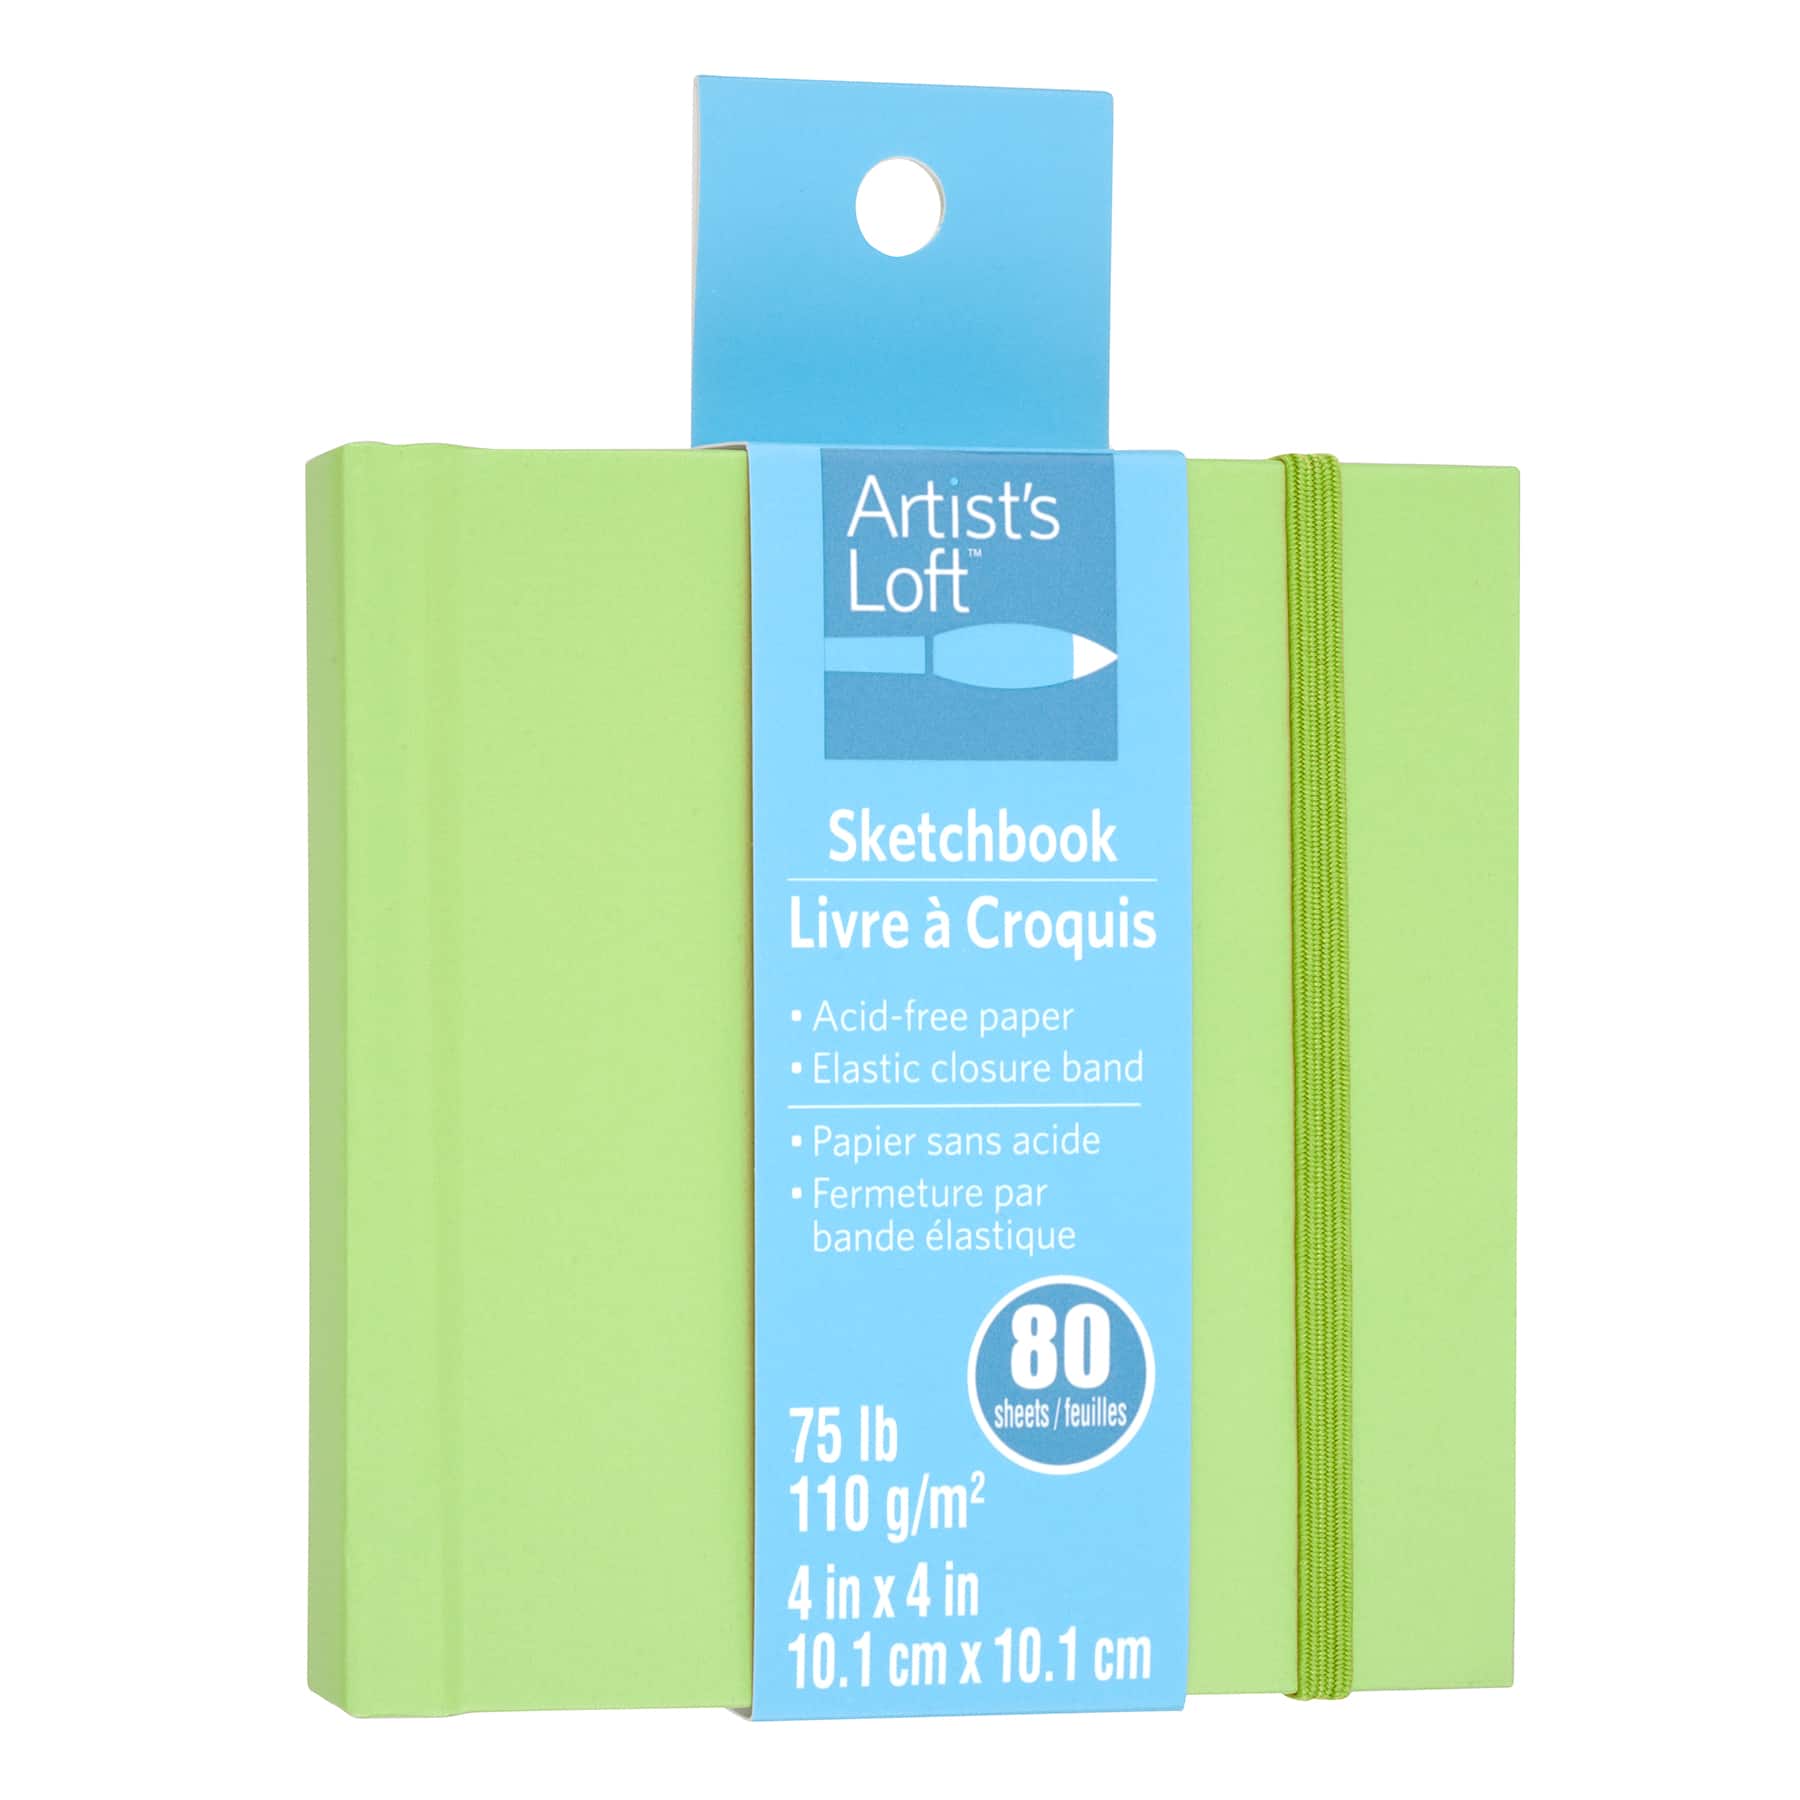 The smallest sketchbook we've offered! This Artist's Loft 4x4” sketchbook  is compact and super portable. Details: Artist's Loft…